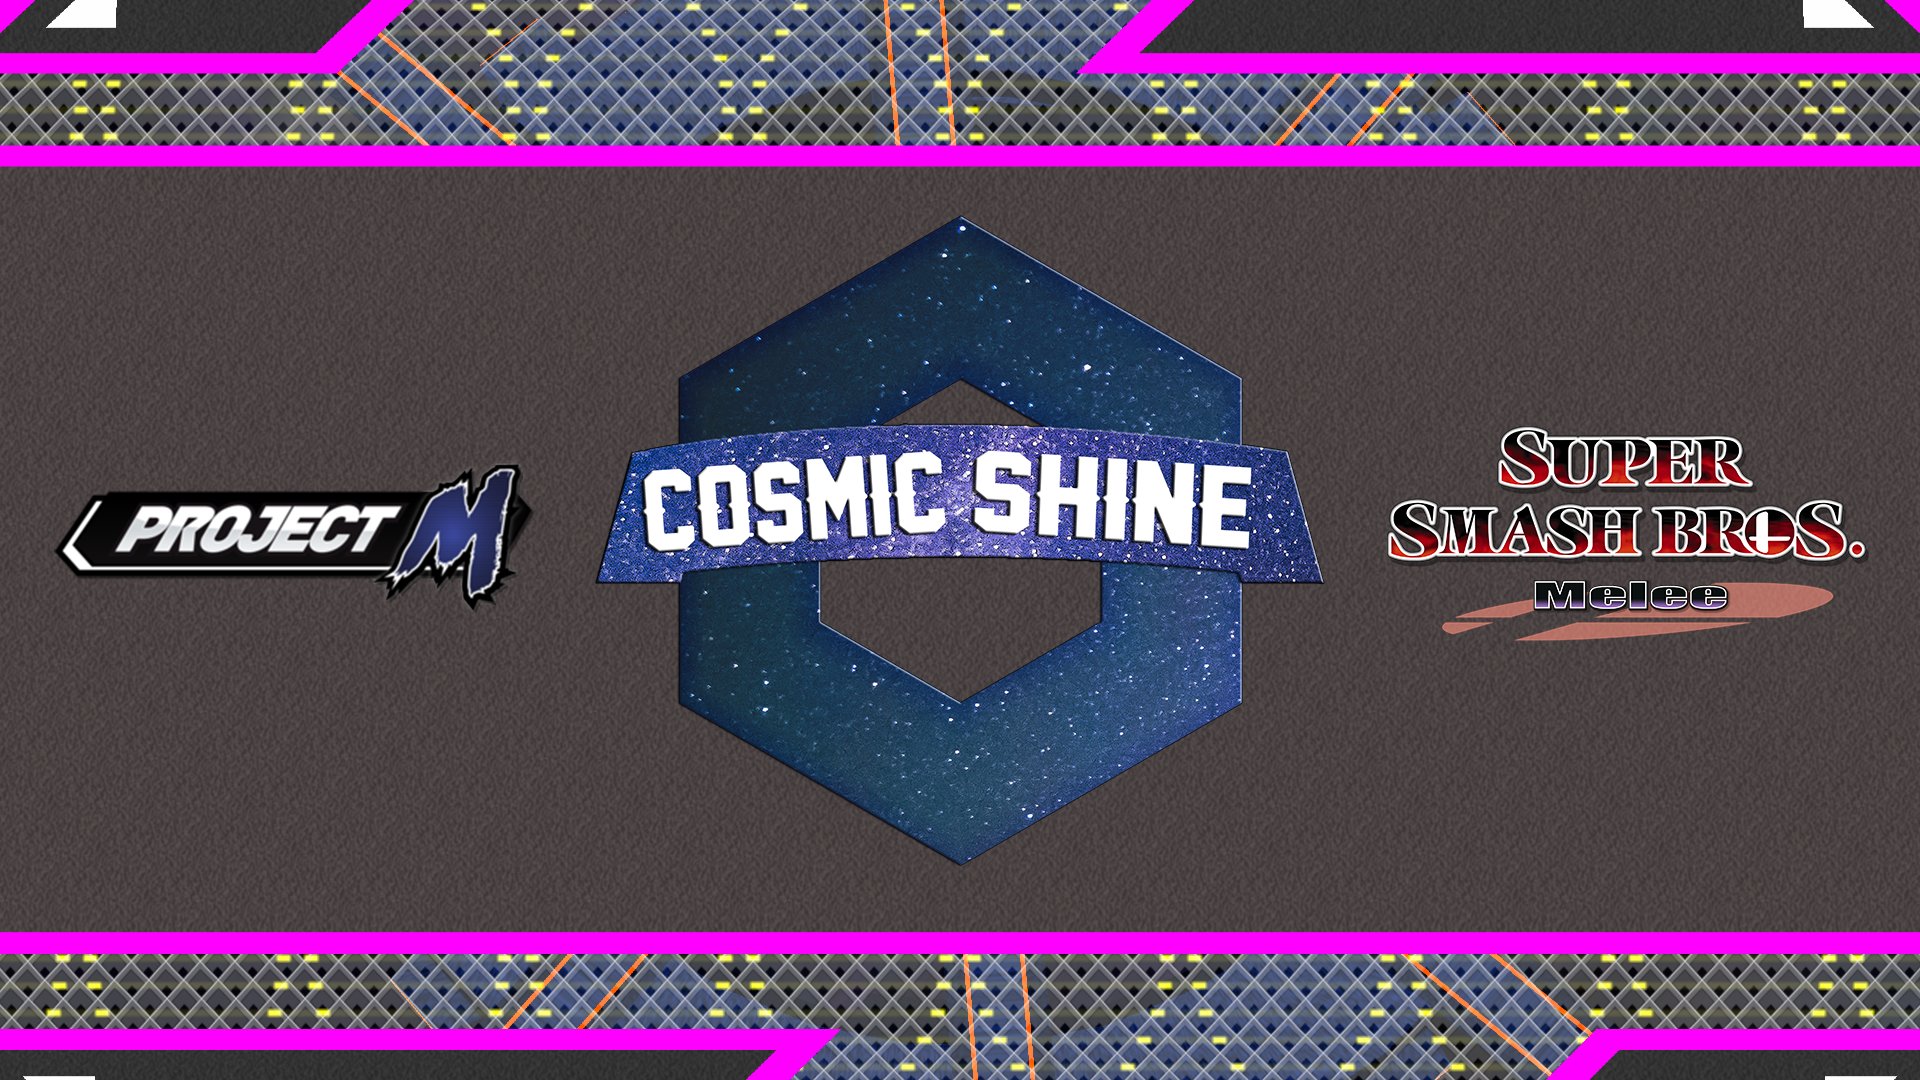 Cosmic Shine 2017 - Project M Singles